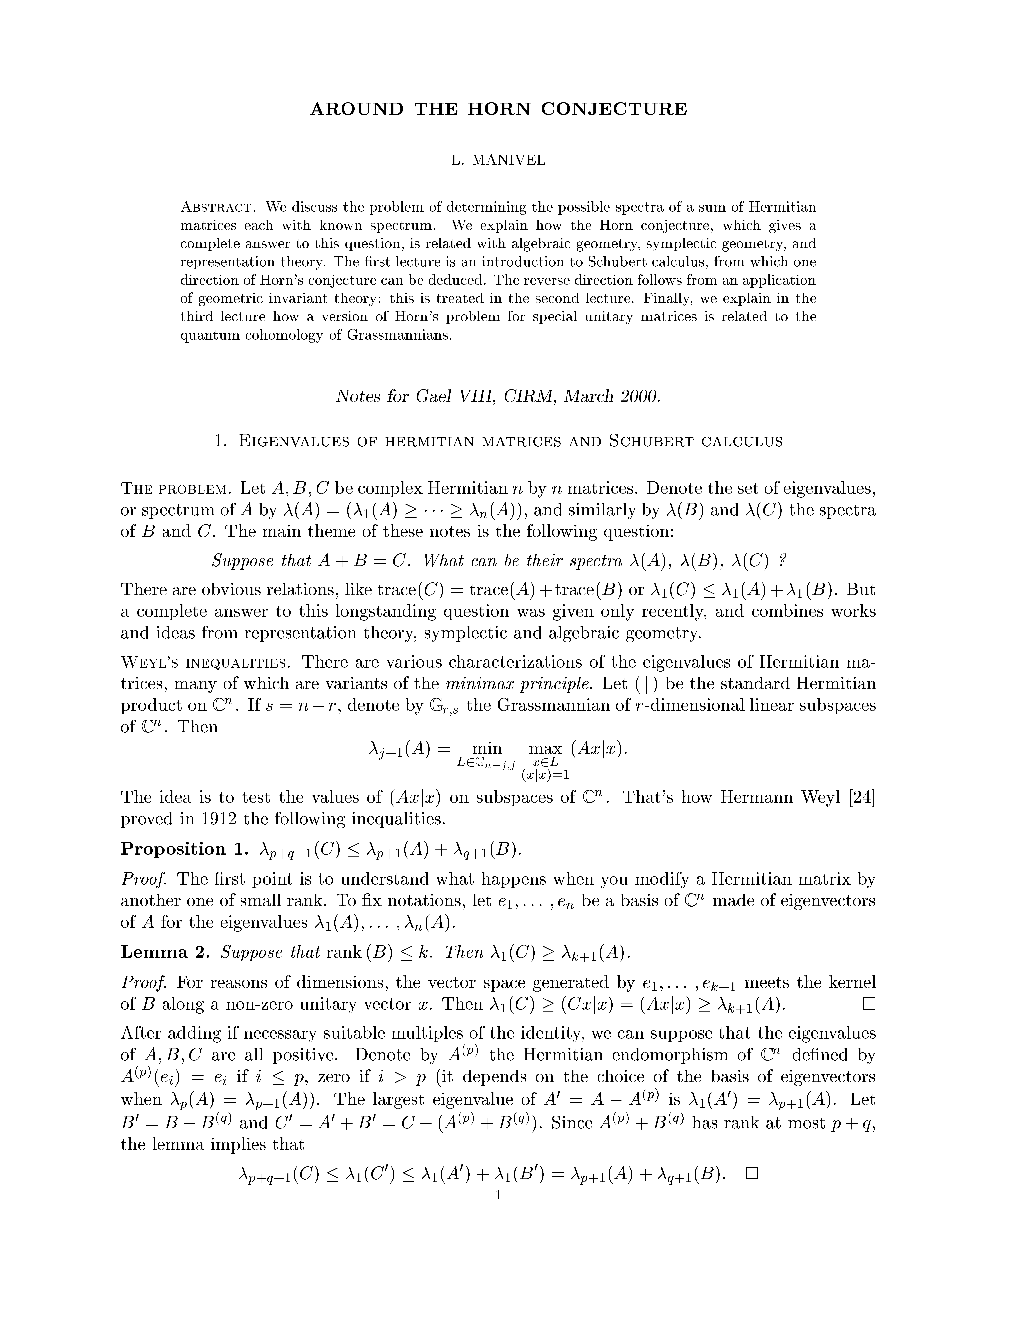 1. Eigenvalues of Hermitian Matrices and Schubert Calculus